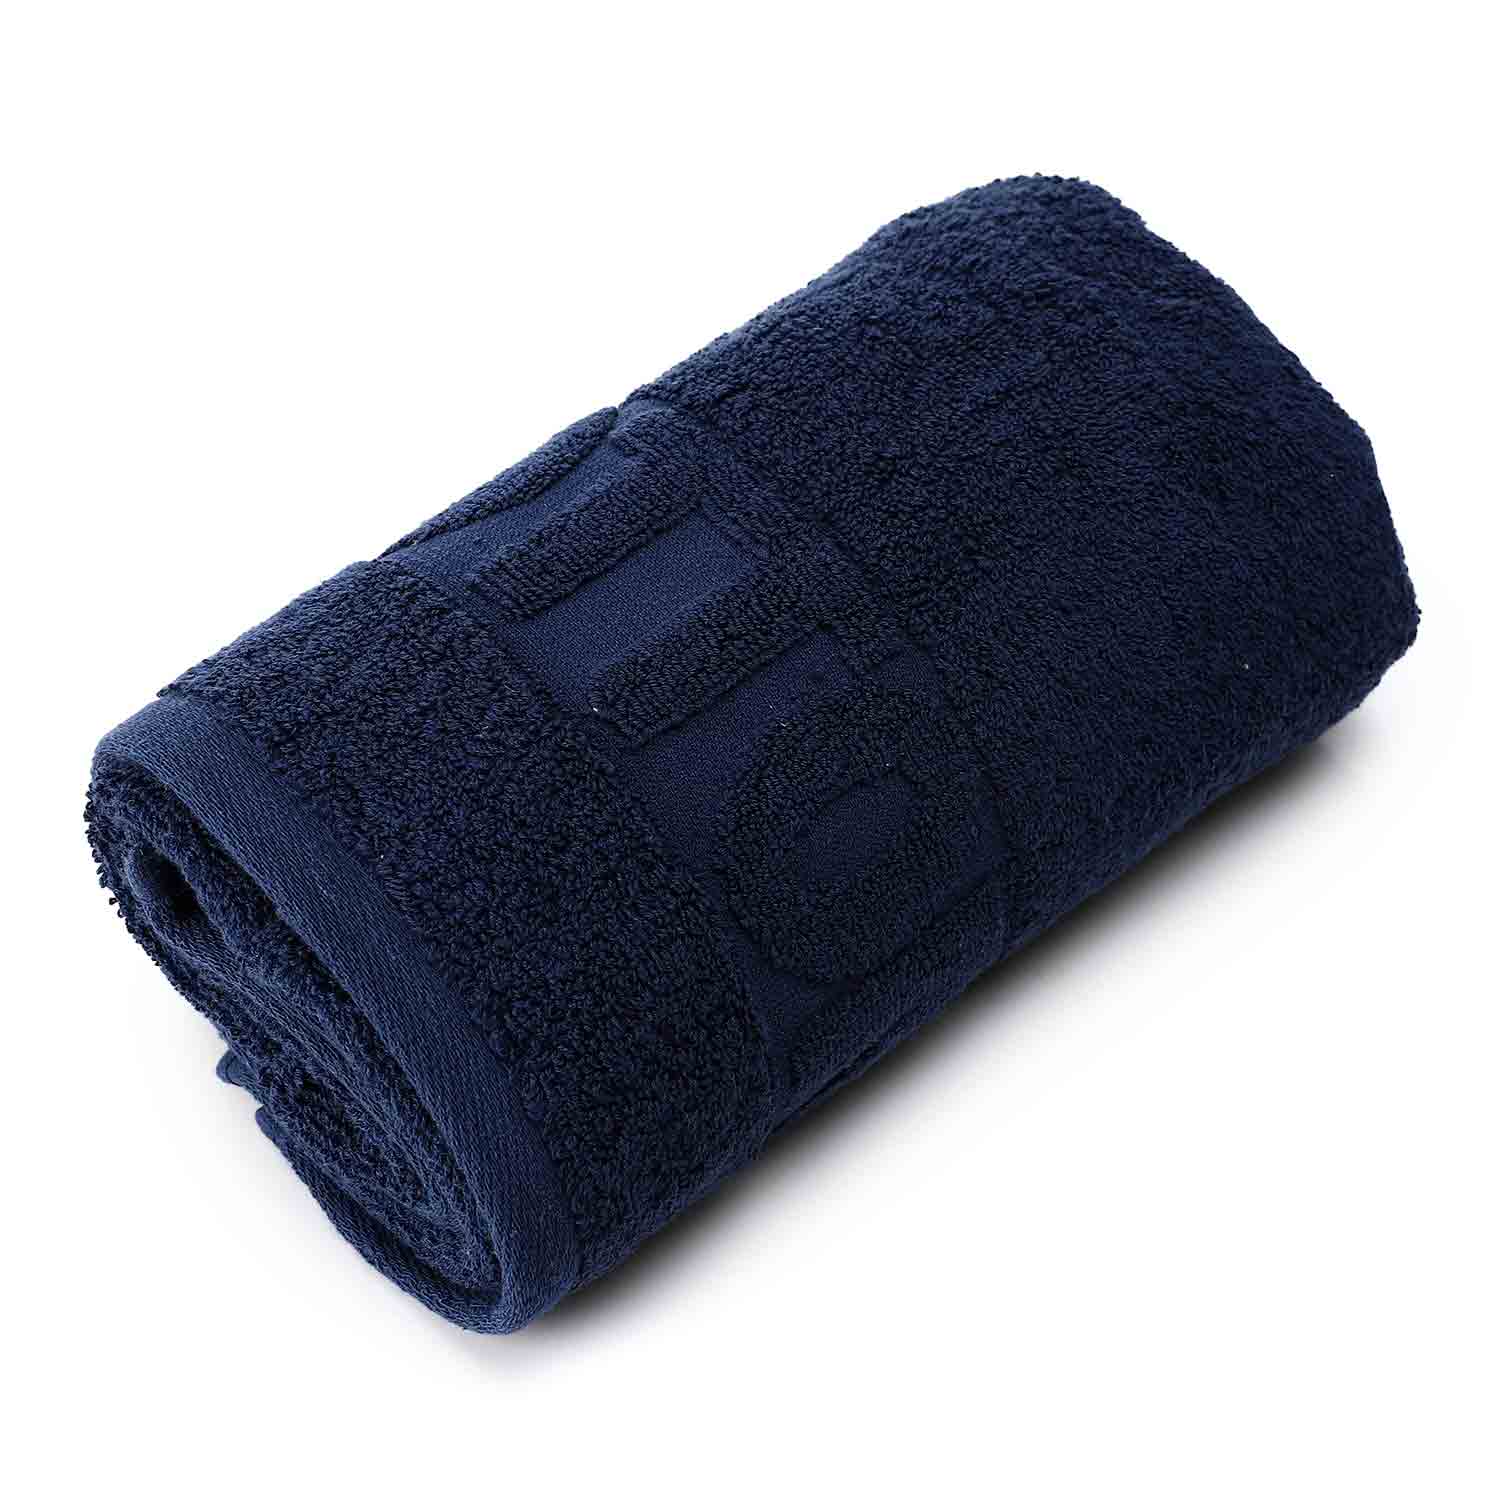 Redcotton Deluxe 100% Cotton Bath Towel- Navy